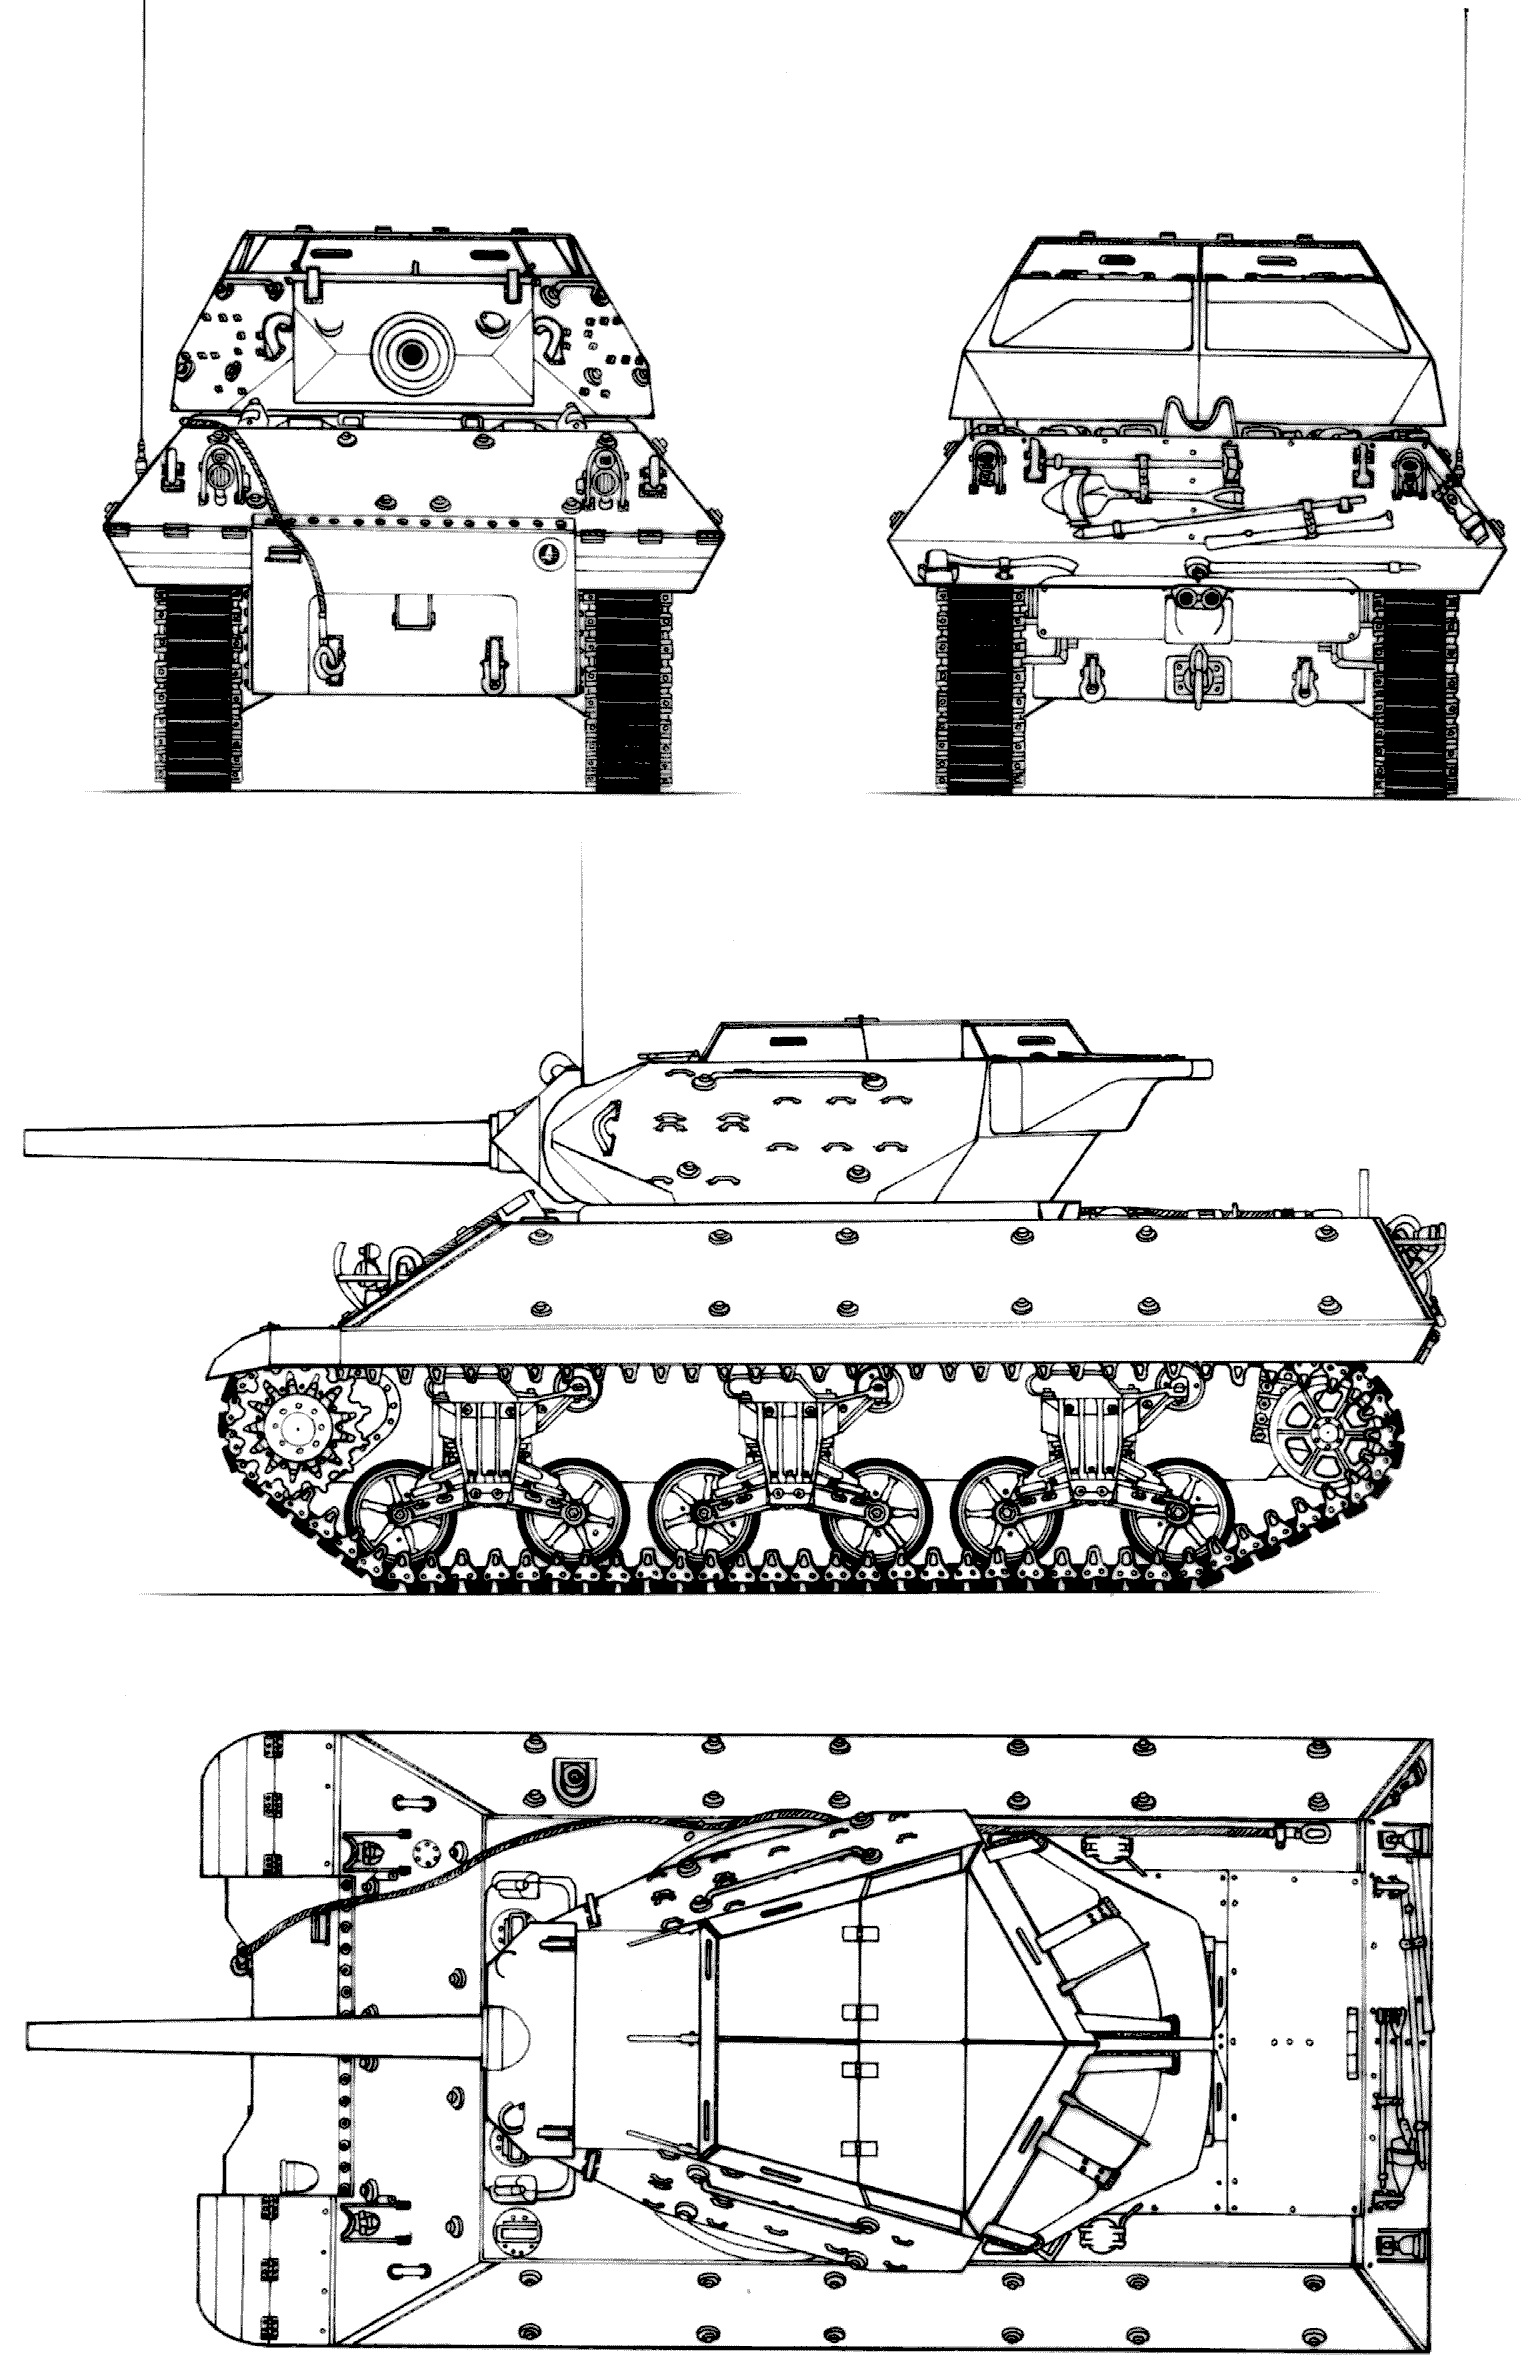 M10 tank destroyer blueprint